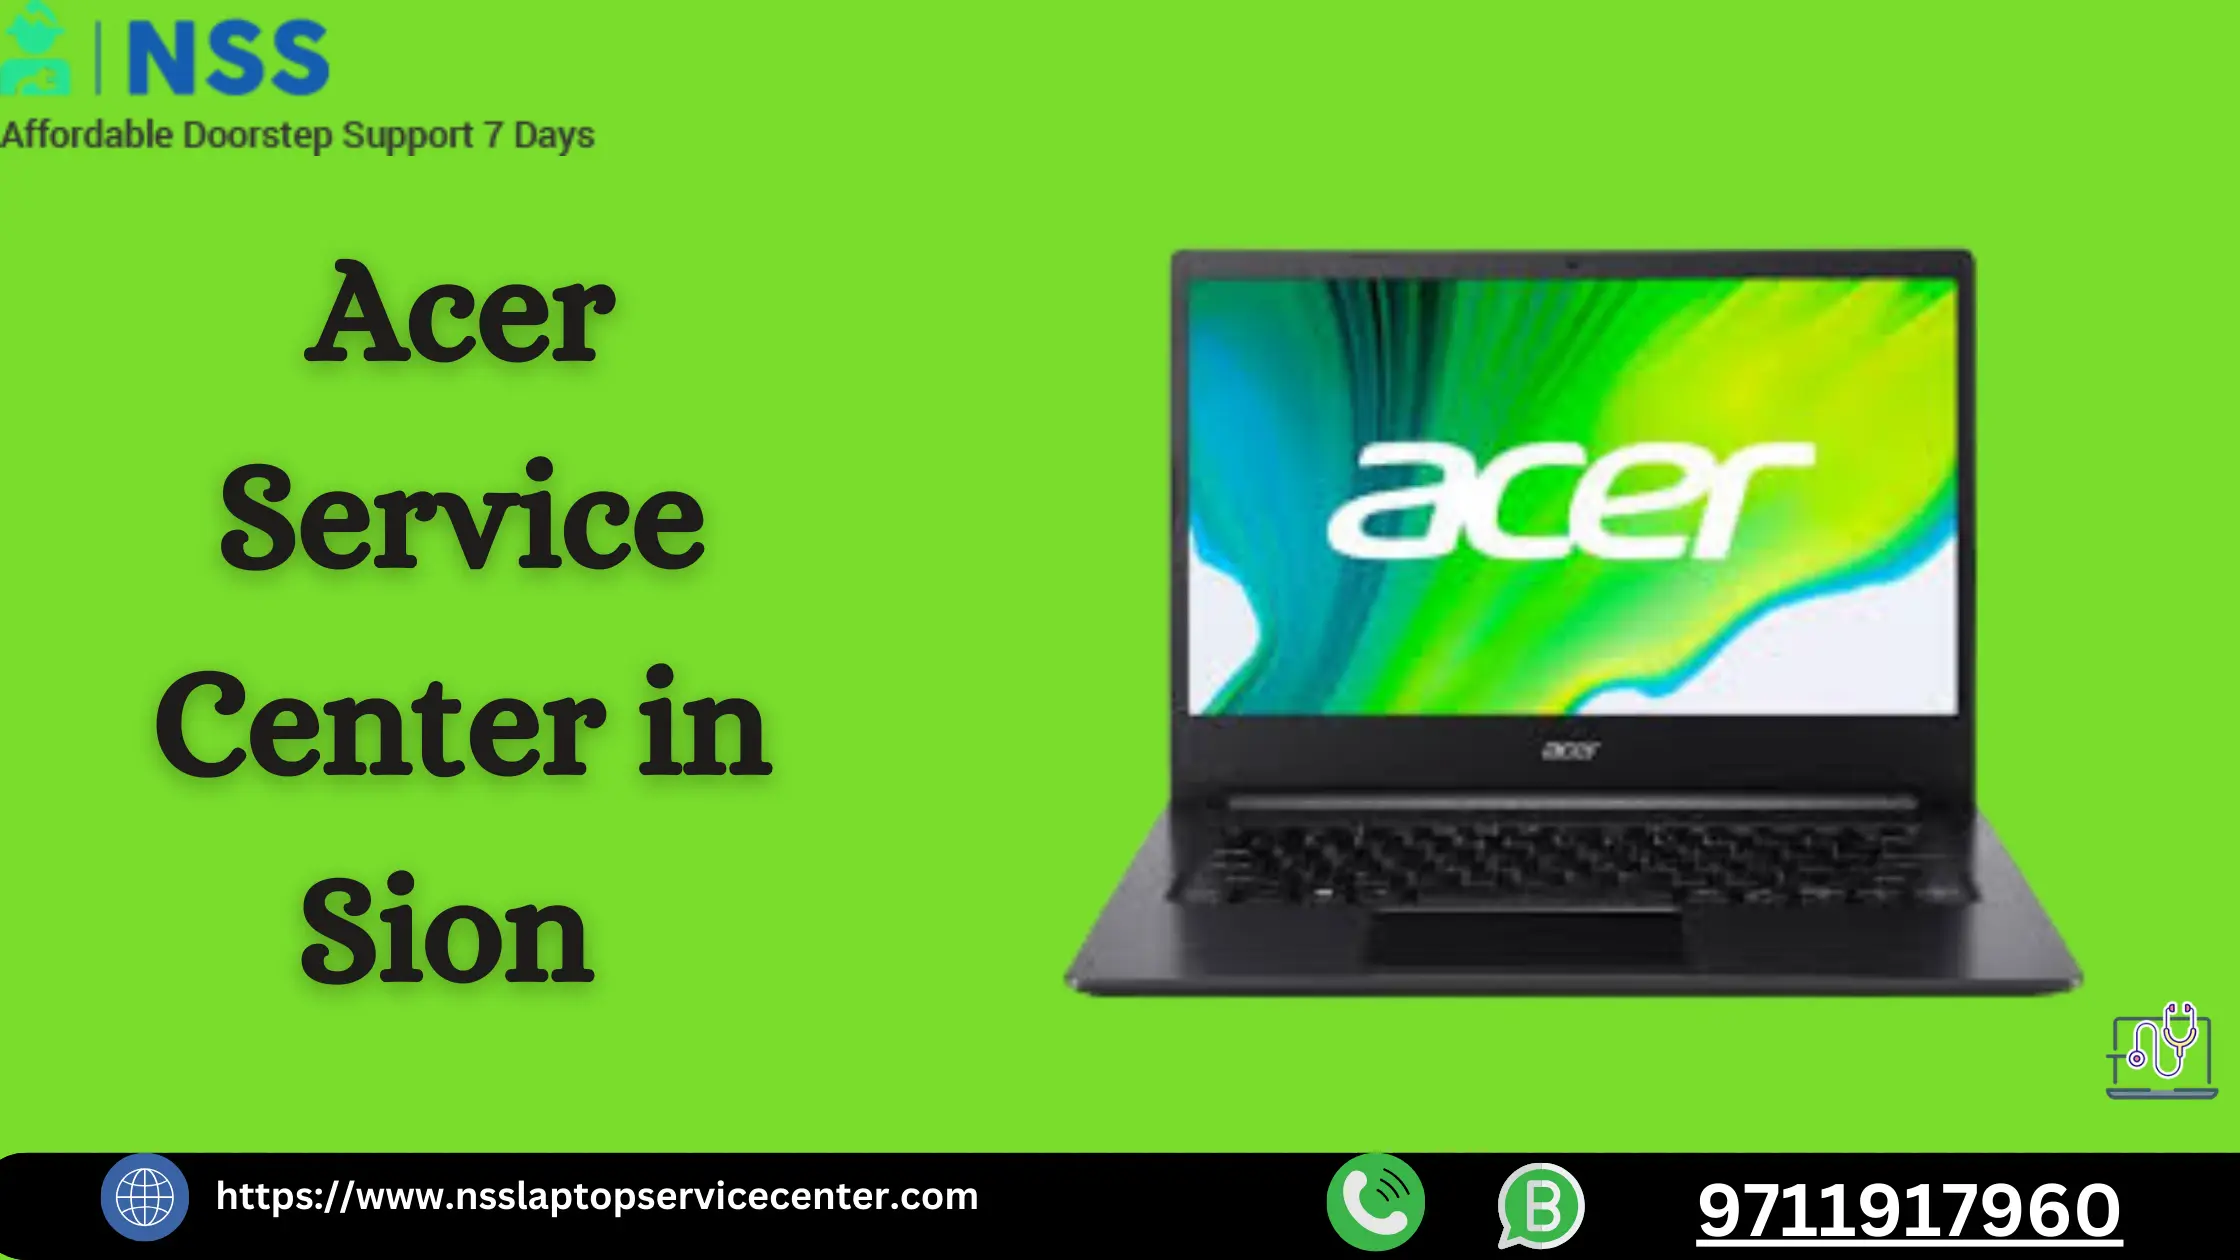 Acer Service Center in Sion Near Mumbai